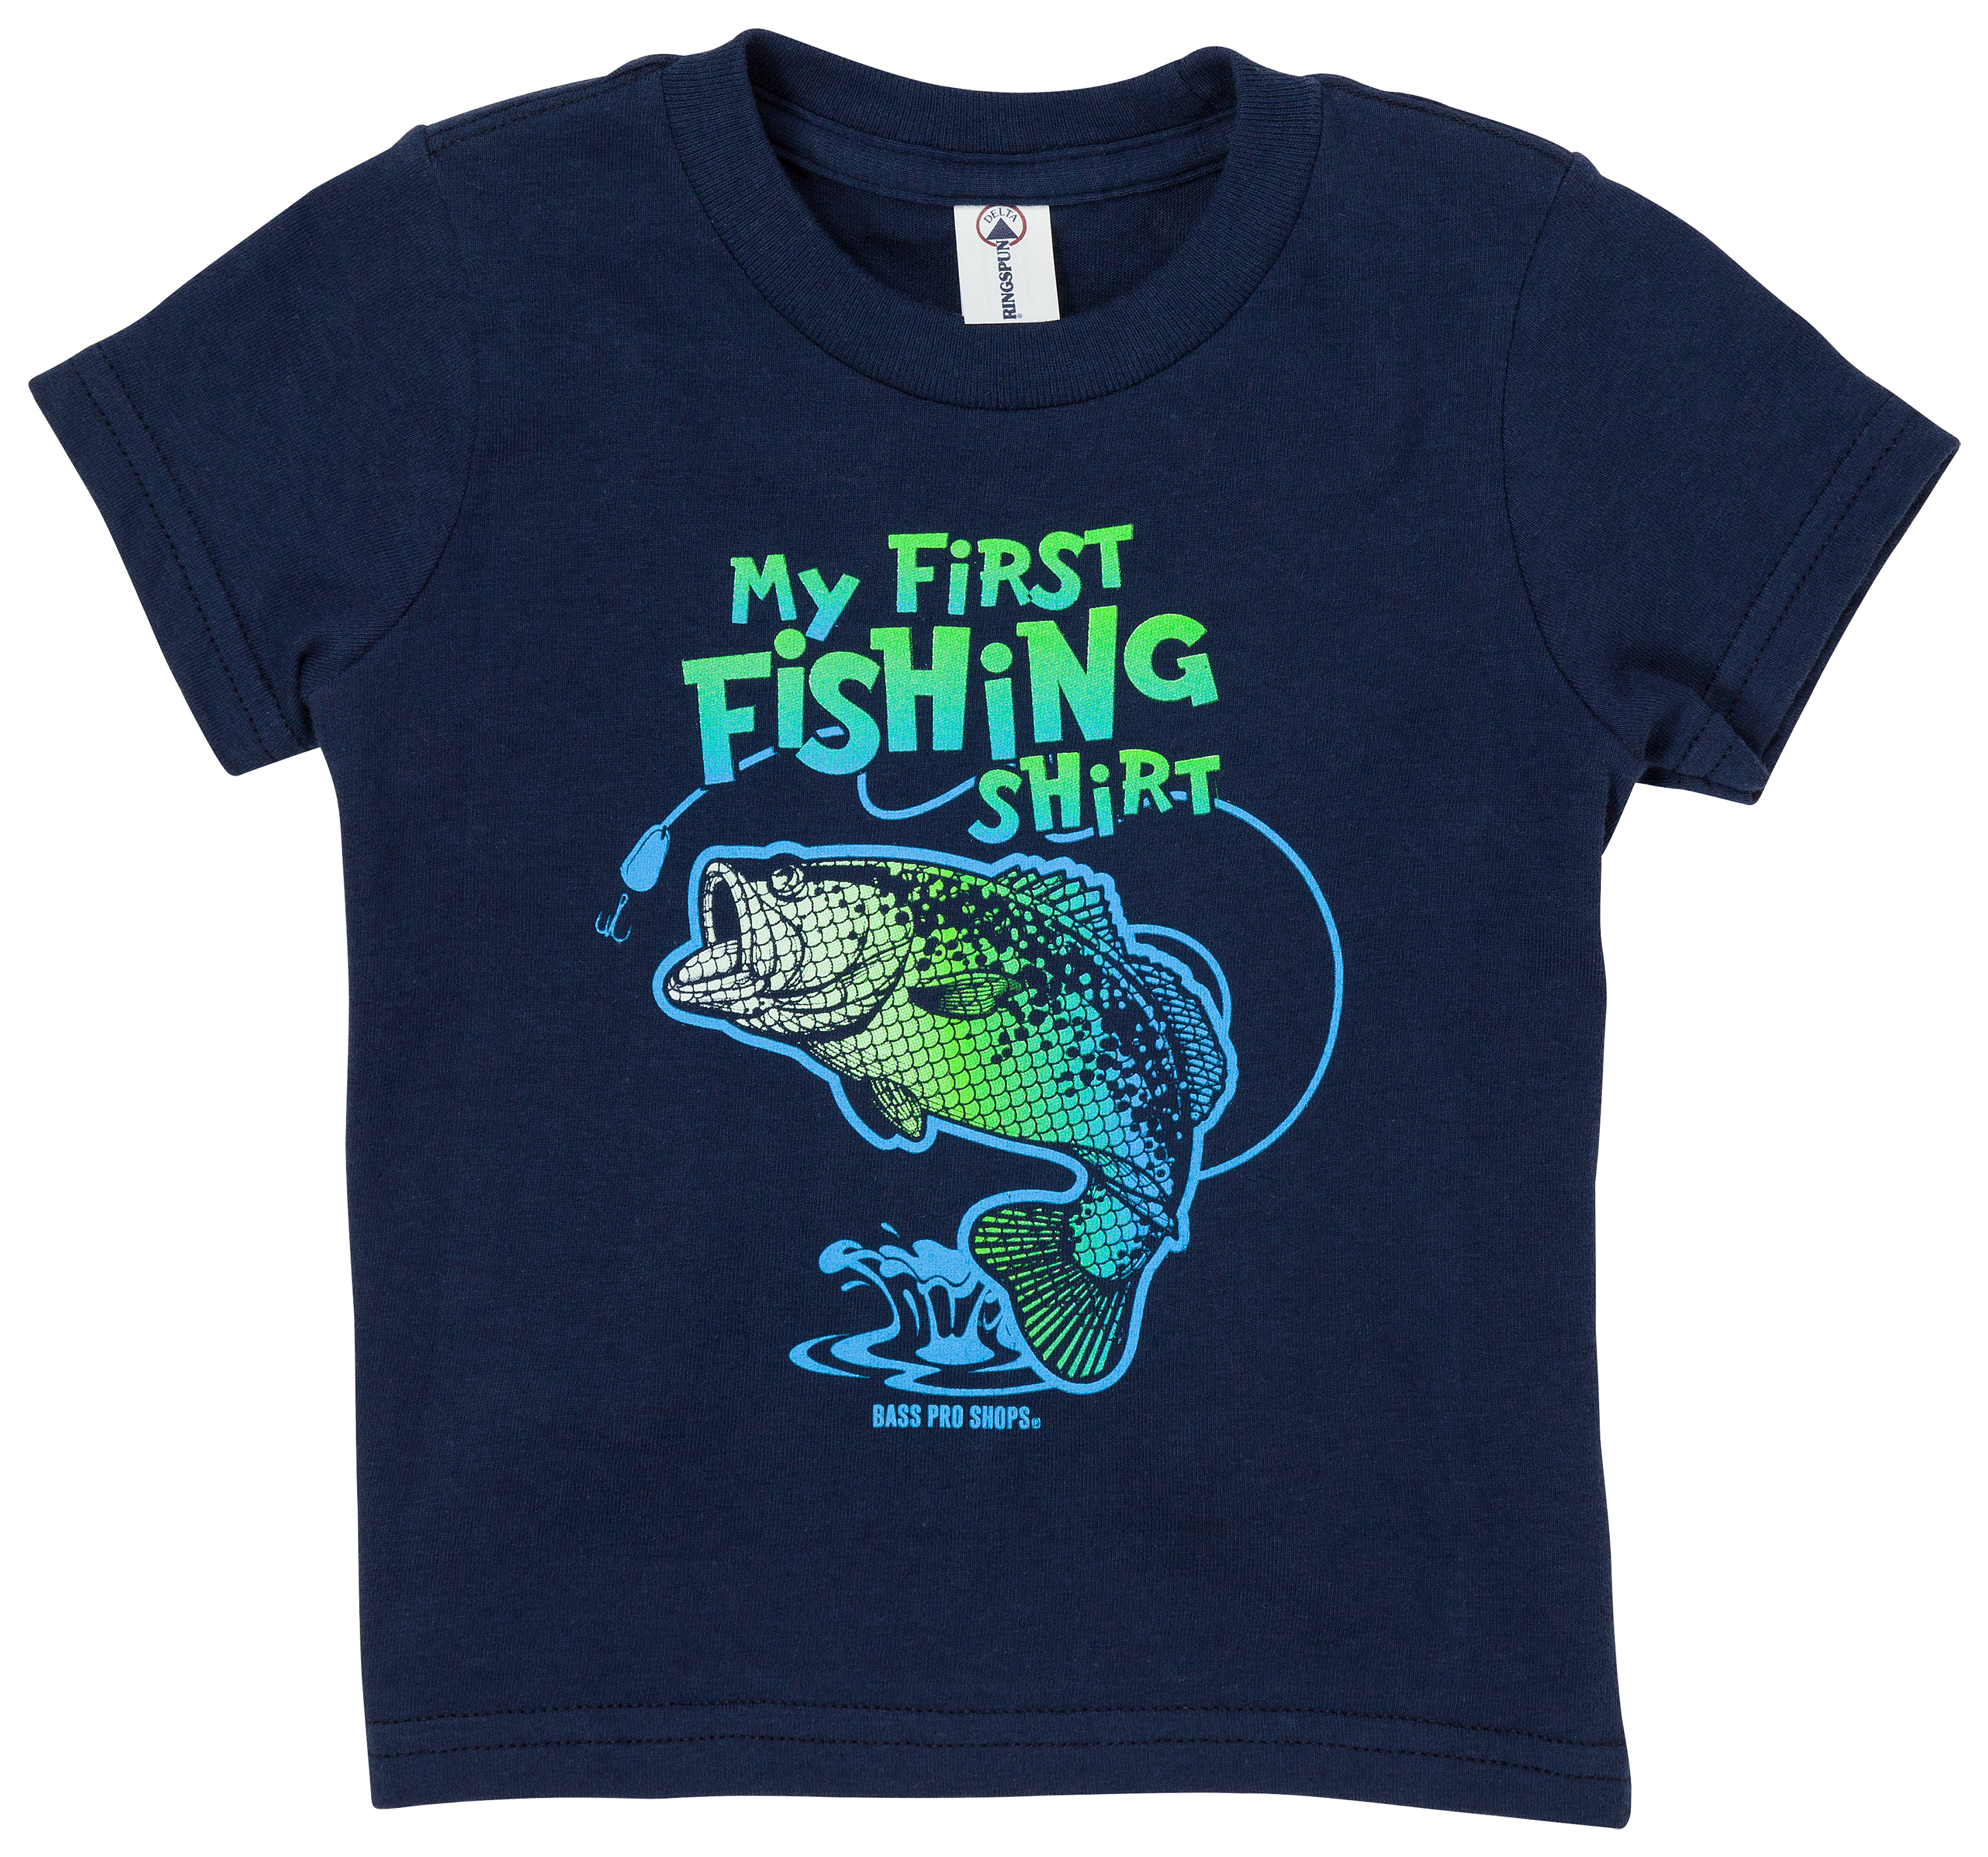 Bass Pro Shops My First Fishing Shirt Short-Sleeve T-Shirt for Kids